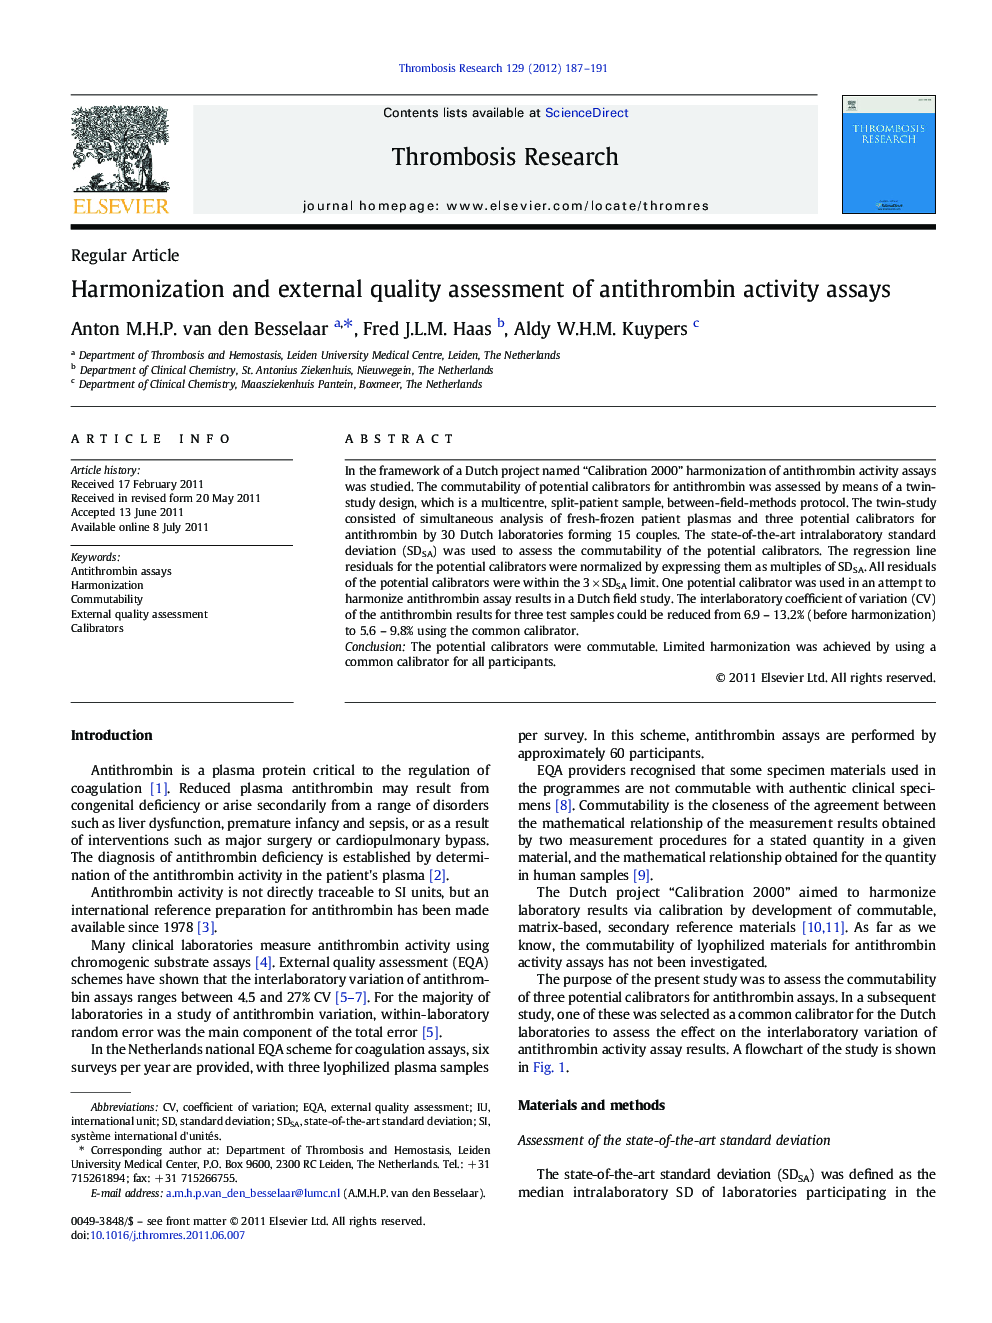 Harmonization and external quality assessment of antithrombin activity assays